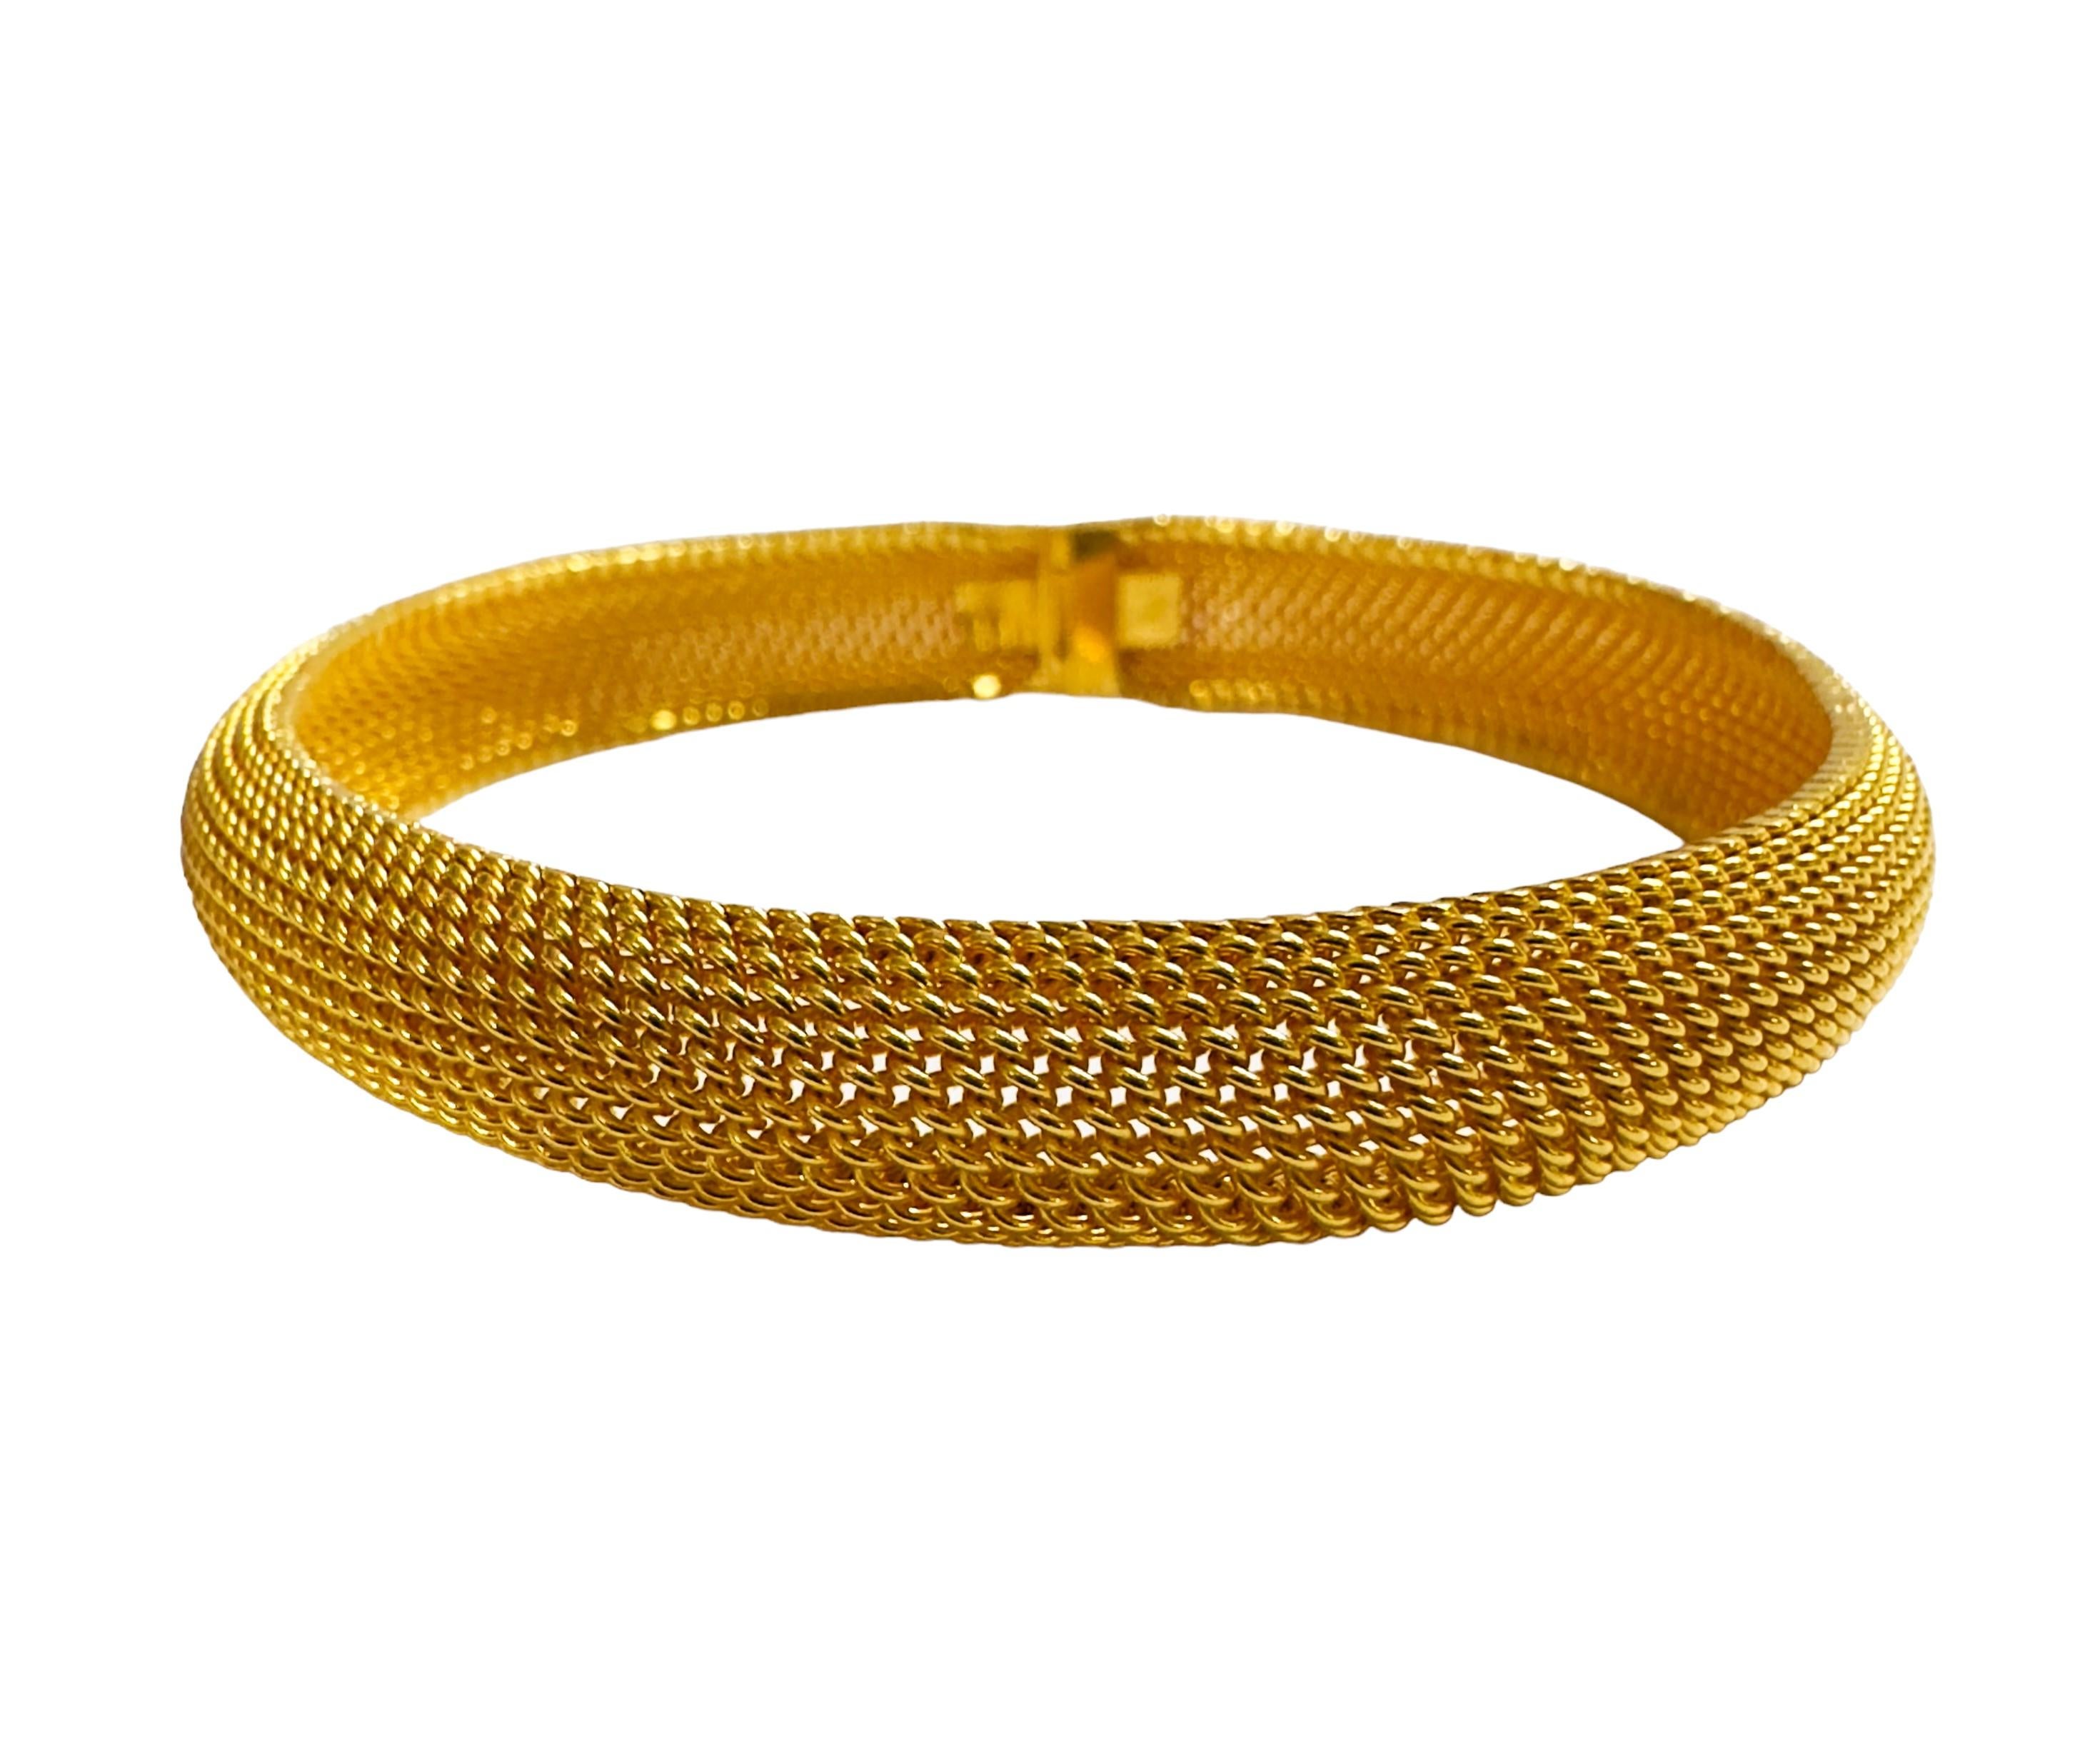 Stunning 22K Yellow Gold Woven Caviar Bracelet 30.59 Grams For Sale 5